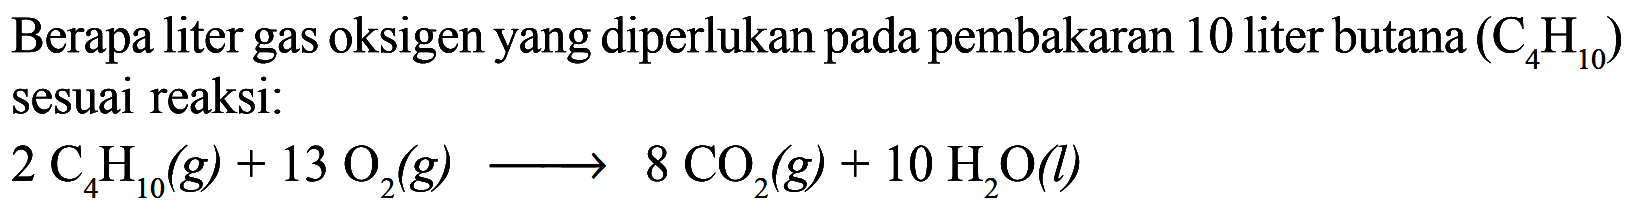 Berapa liter gas oksigen yang diperlukan pada pembakaran 10 liter butana (4H10) sesuai reaksi: 2C4H10(g) + 13O2(g) -> 8CO2(g) + 10H2O(l)